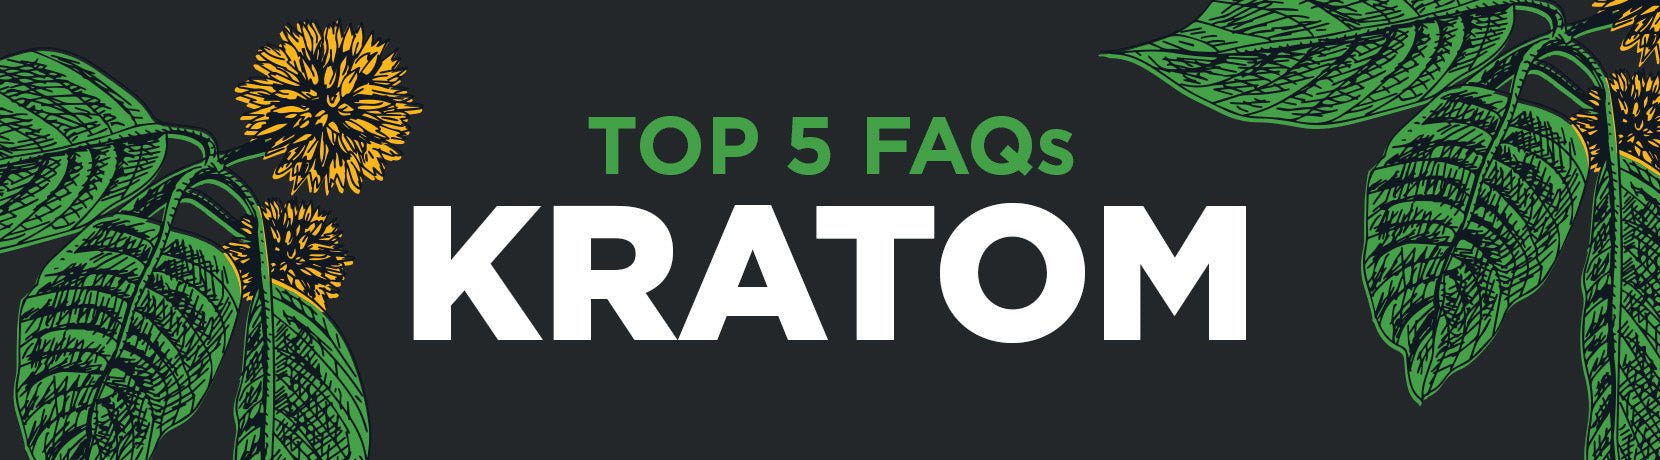 Top 5 FAQs- Kratom - Shop CBD Kratom